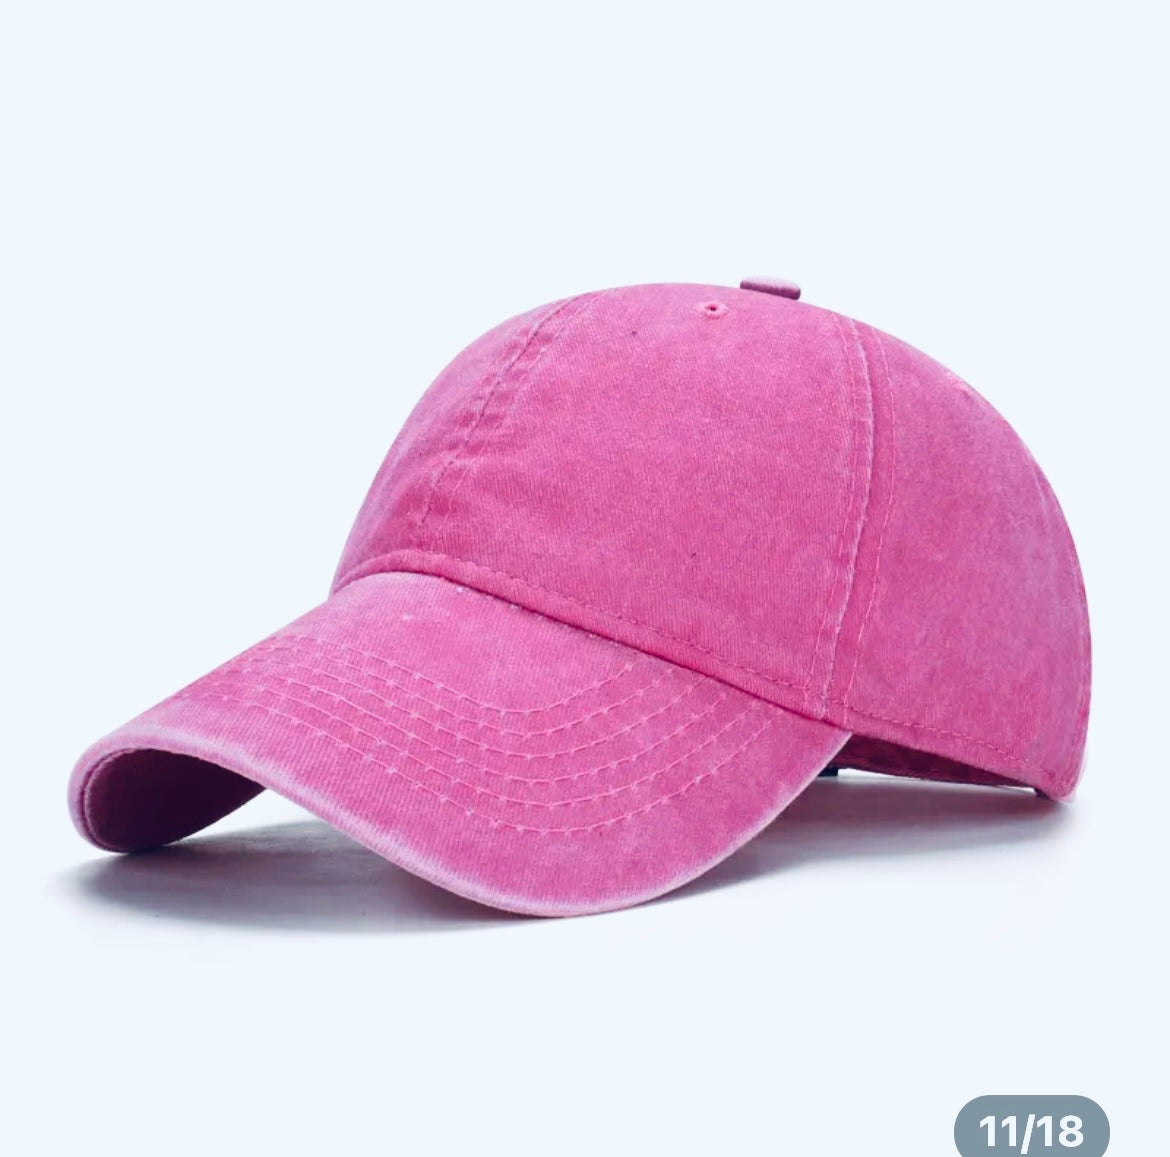 Pink Jean Cap